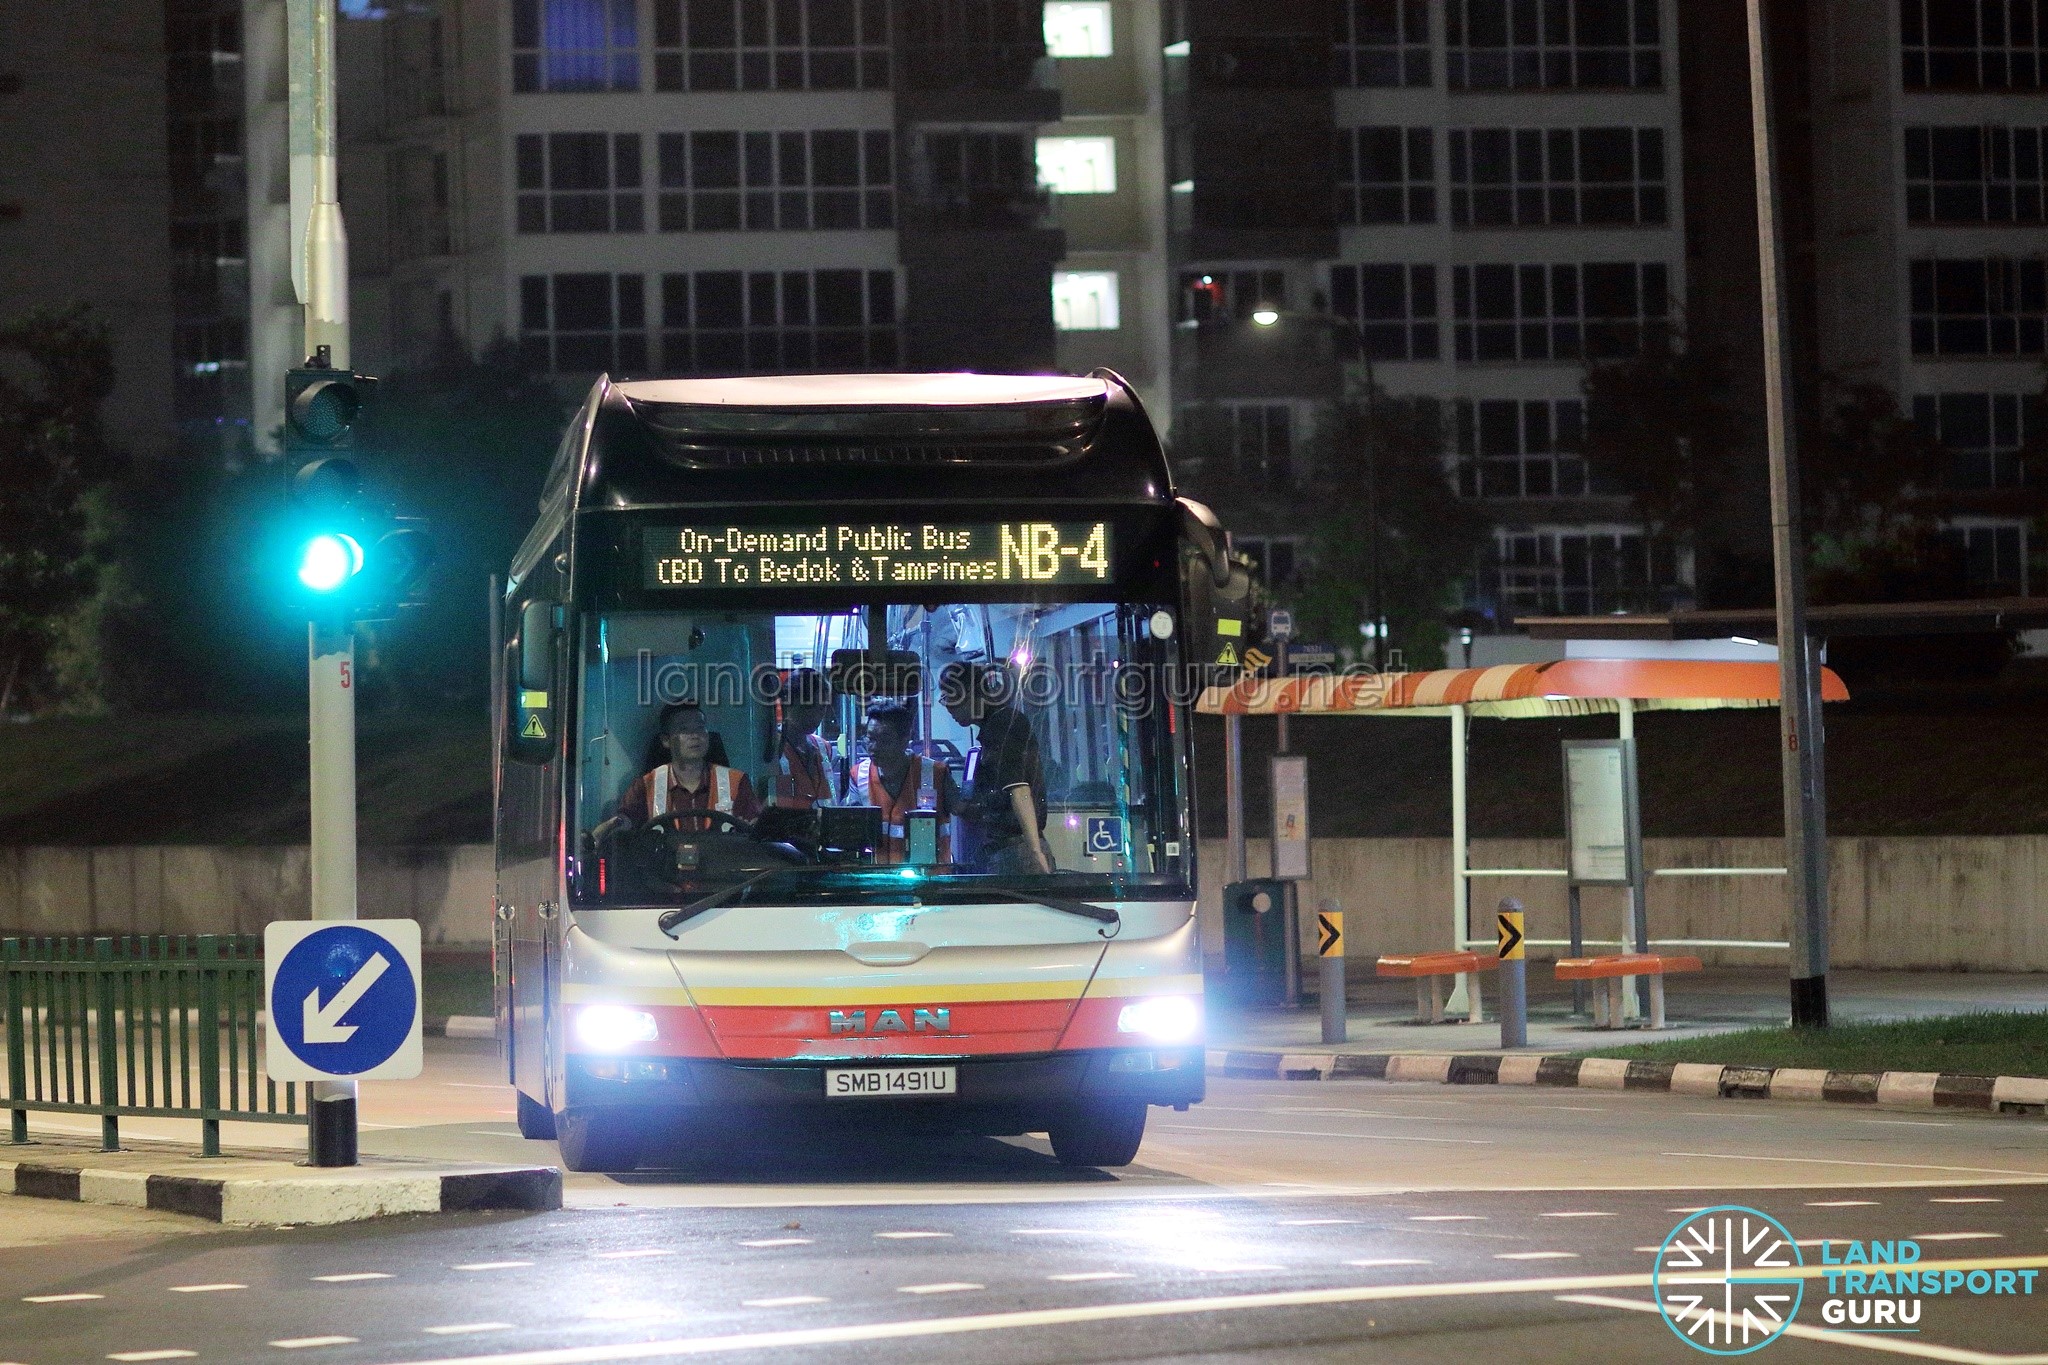 On-Demand Public Bus - Night Bus (CBD to Bedok and Tampines)